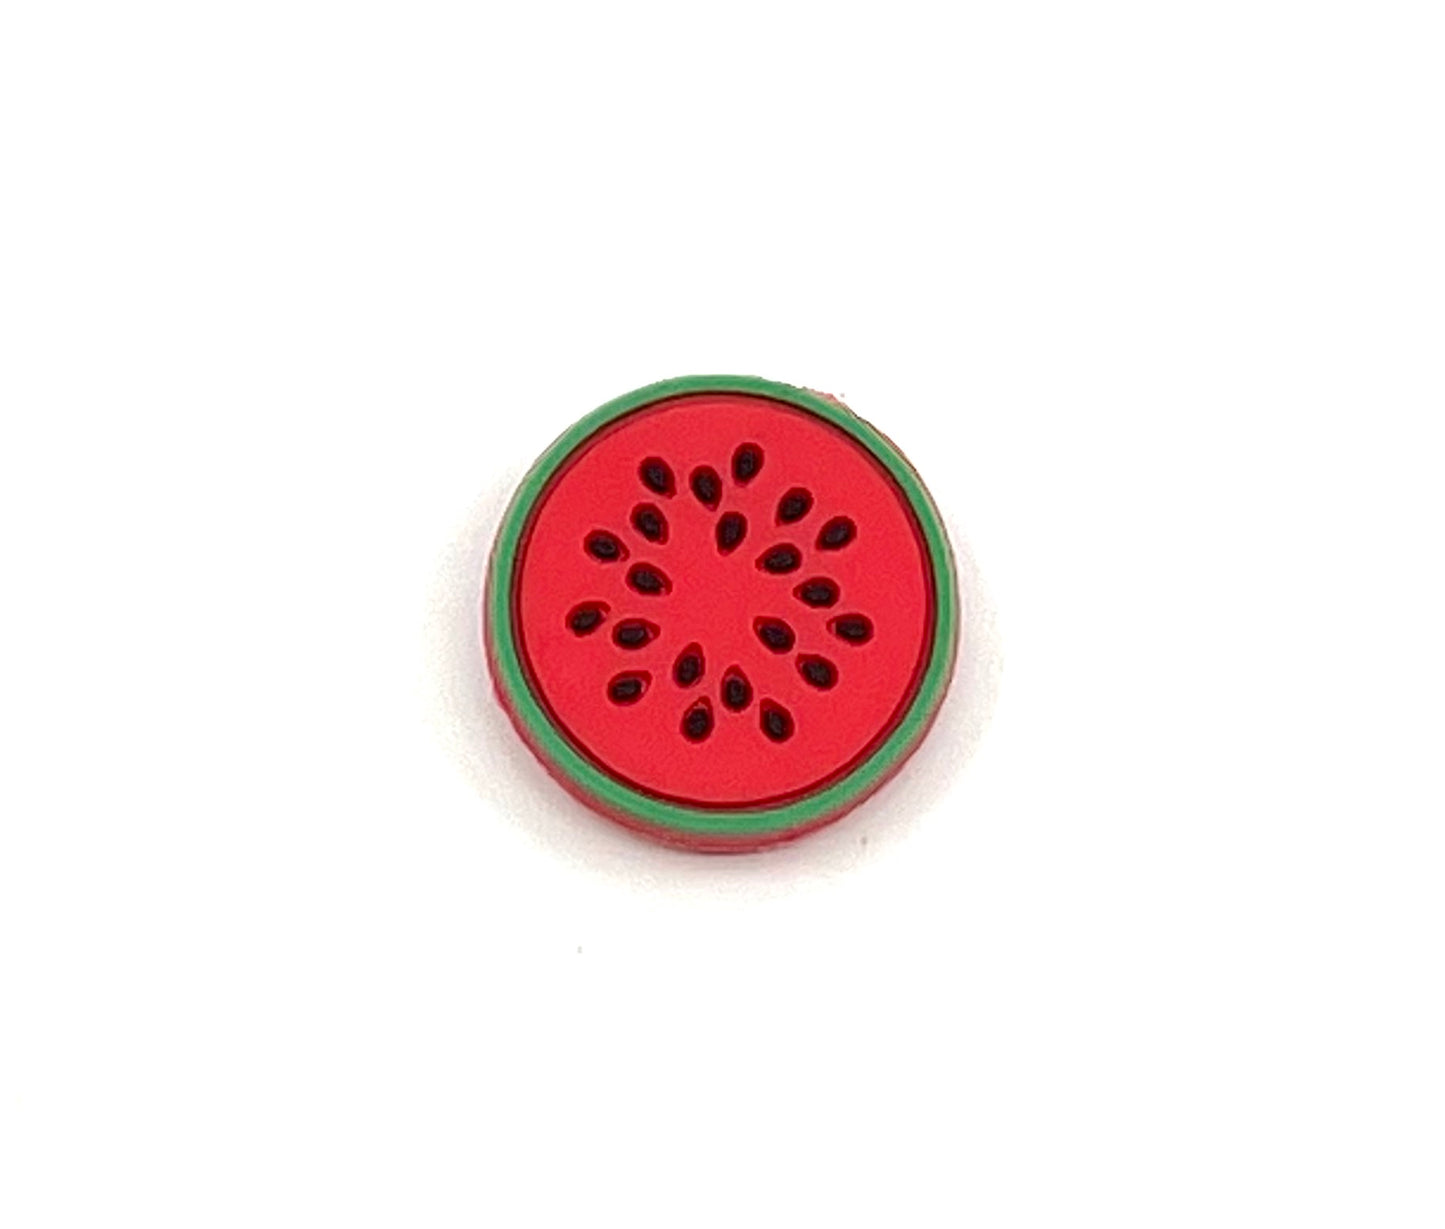 Watermelon cut